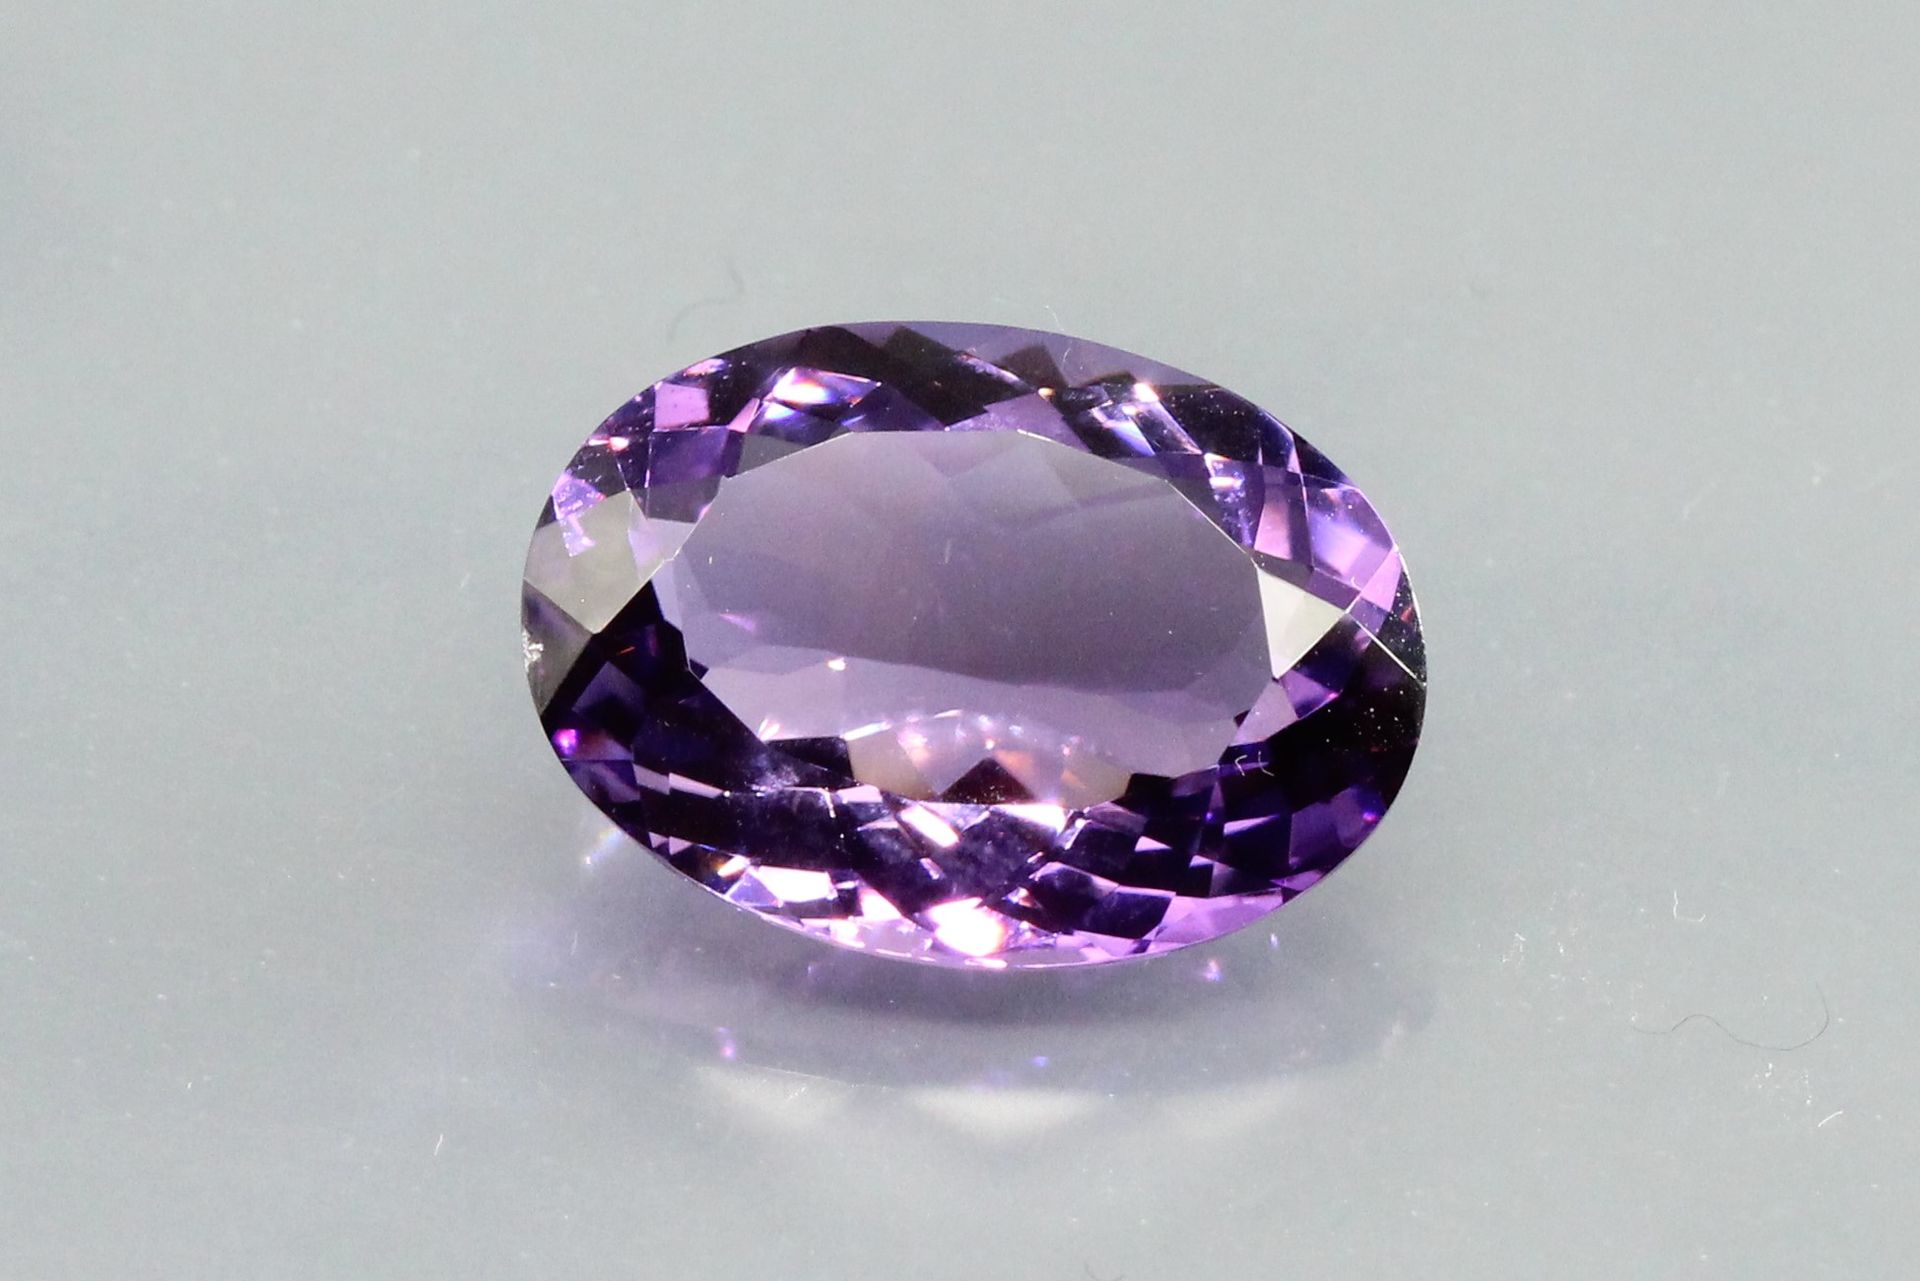 Null 椭圆形紫水晶在纸上。

重量：11,46克拉。